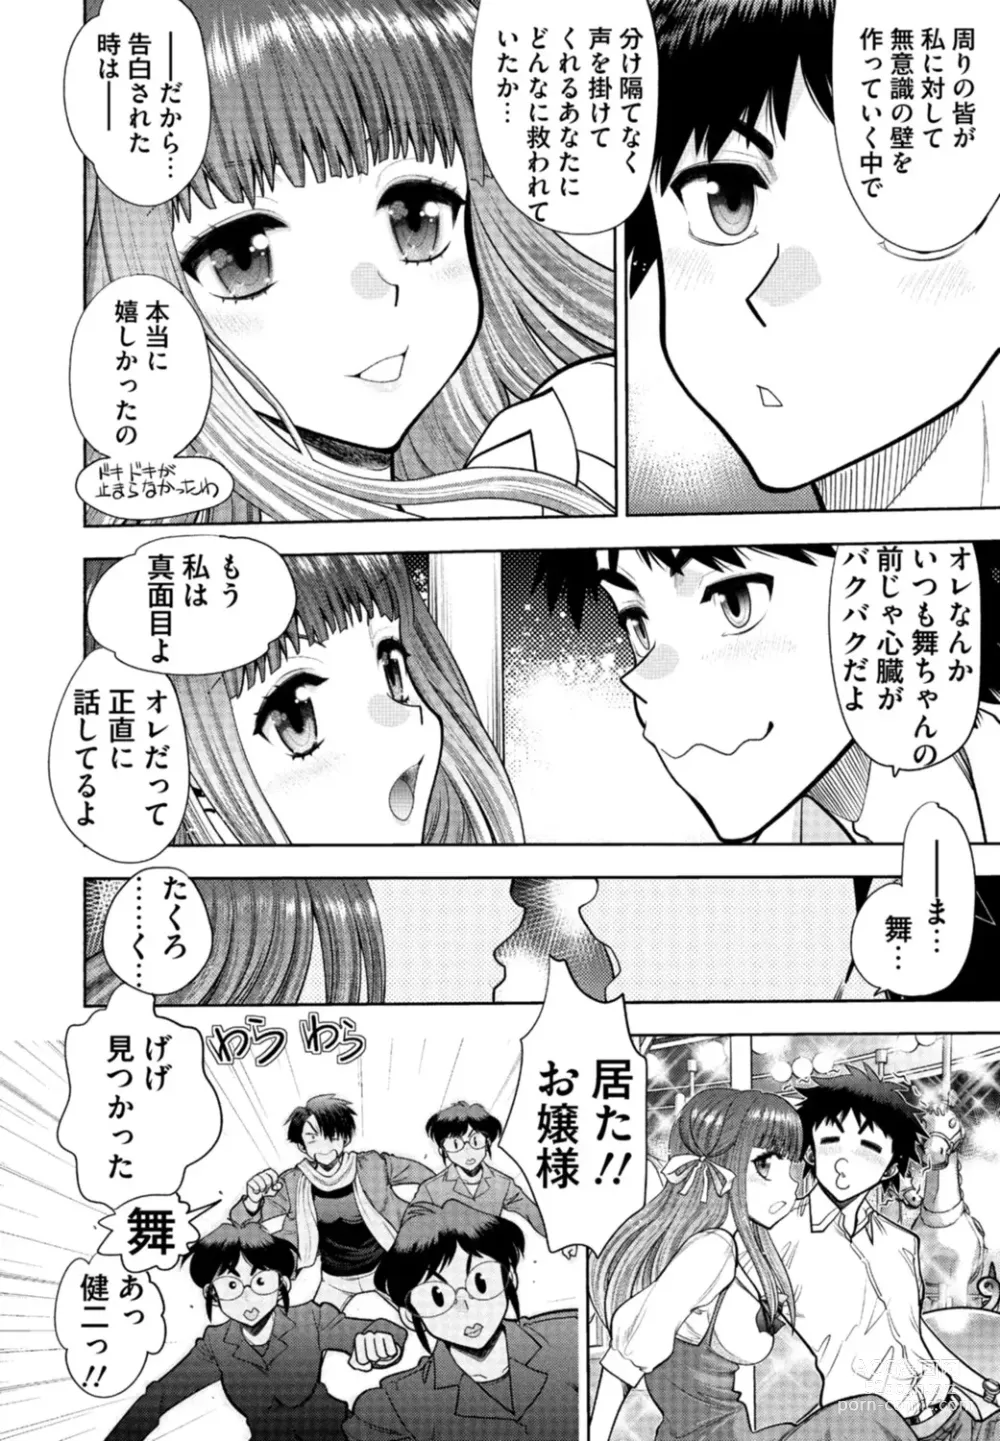 Page 10 of manga Doukyuusei  Remake Adult Edition